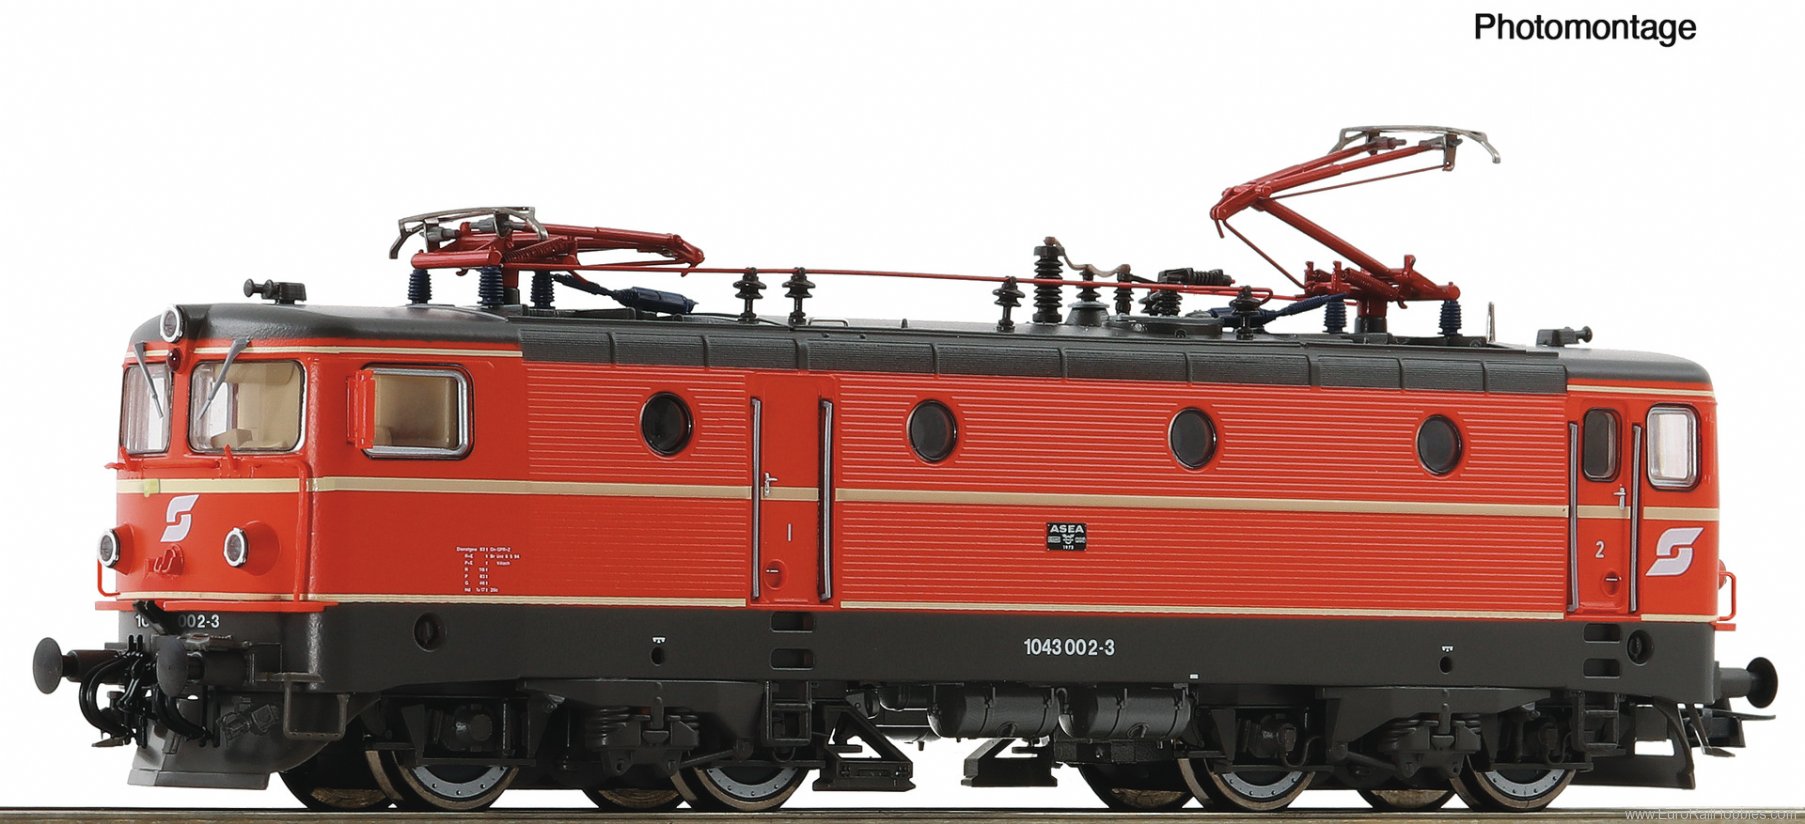 Roco 7520072 Electric locomotive 1043 002-3, ÃBB (Markl